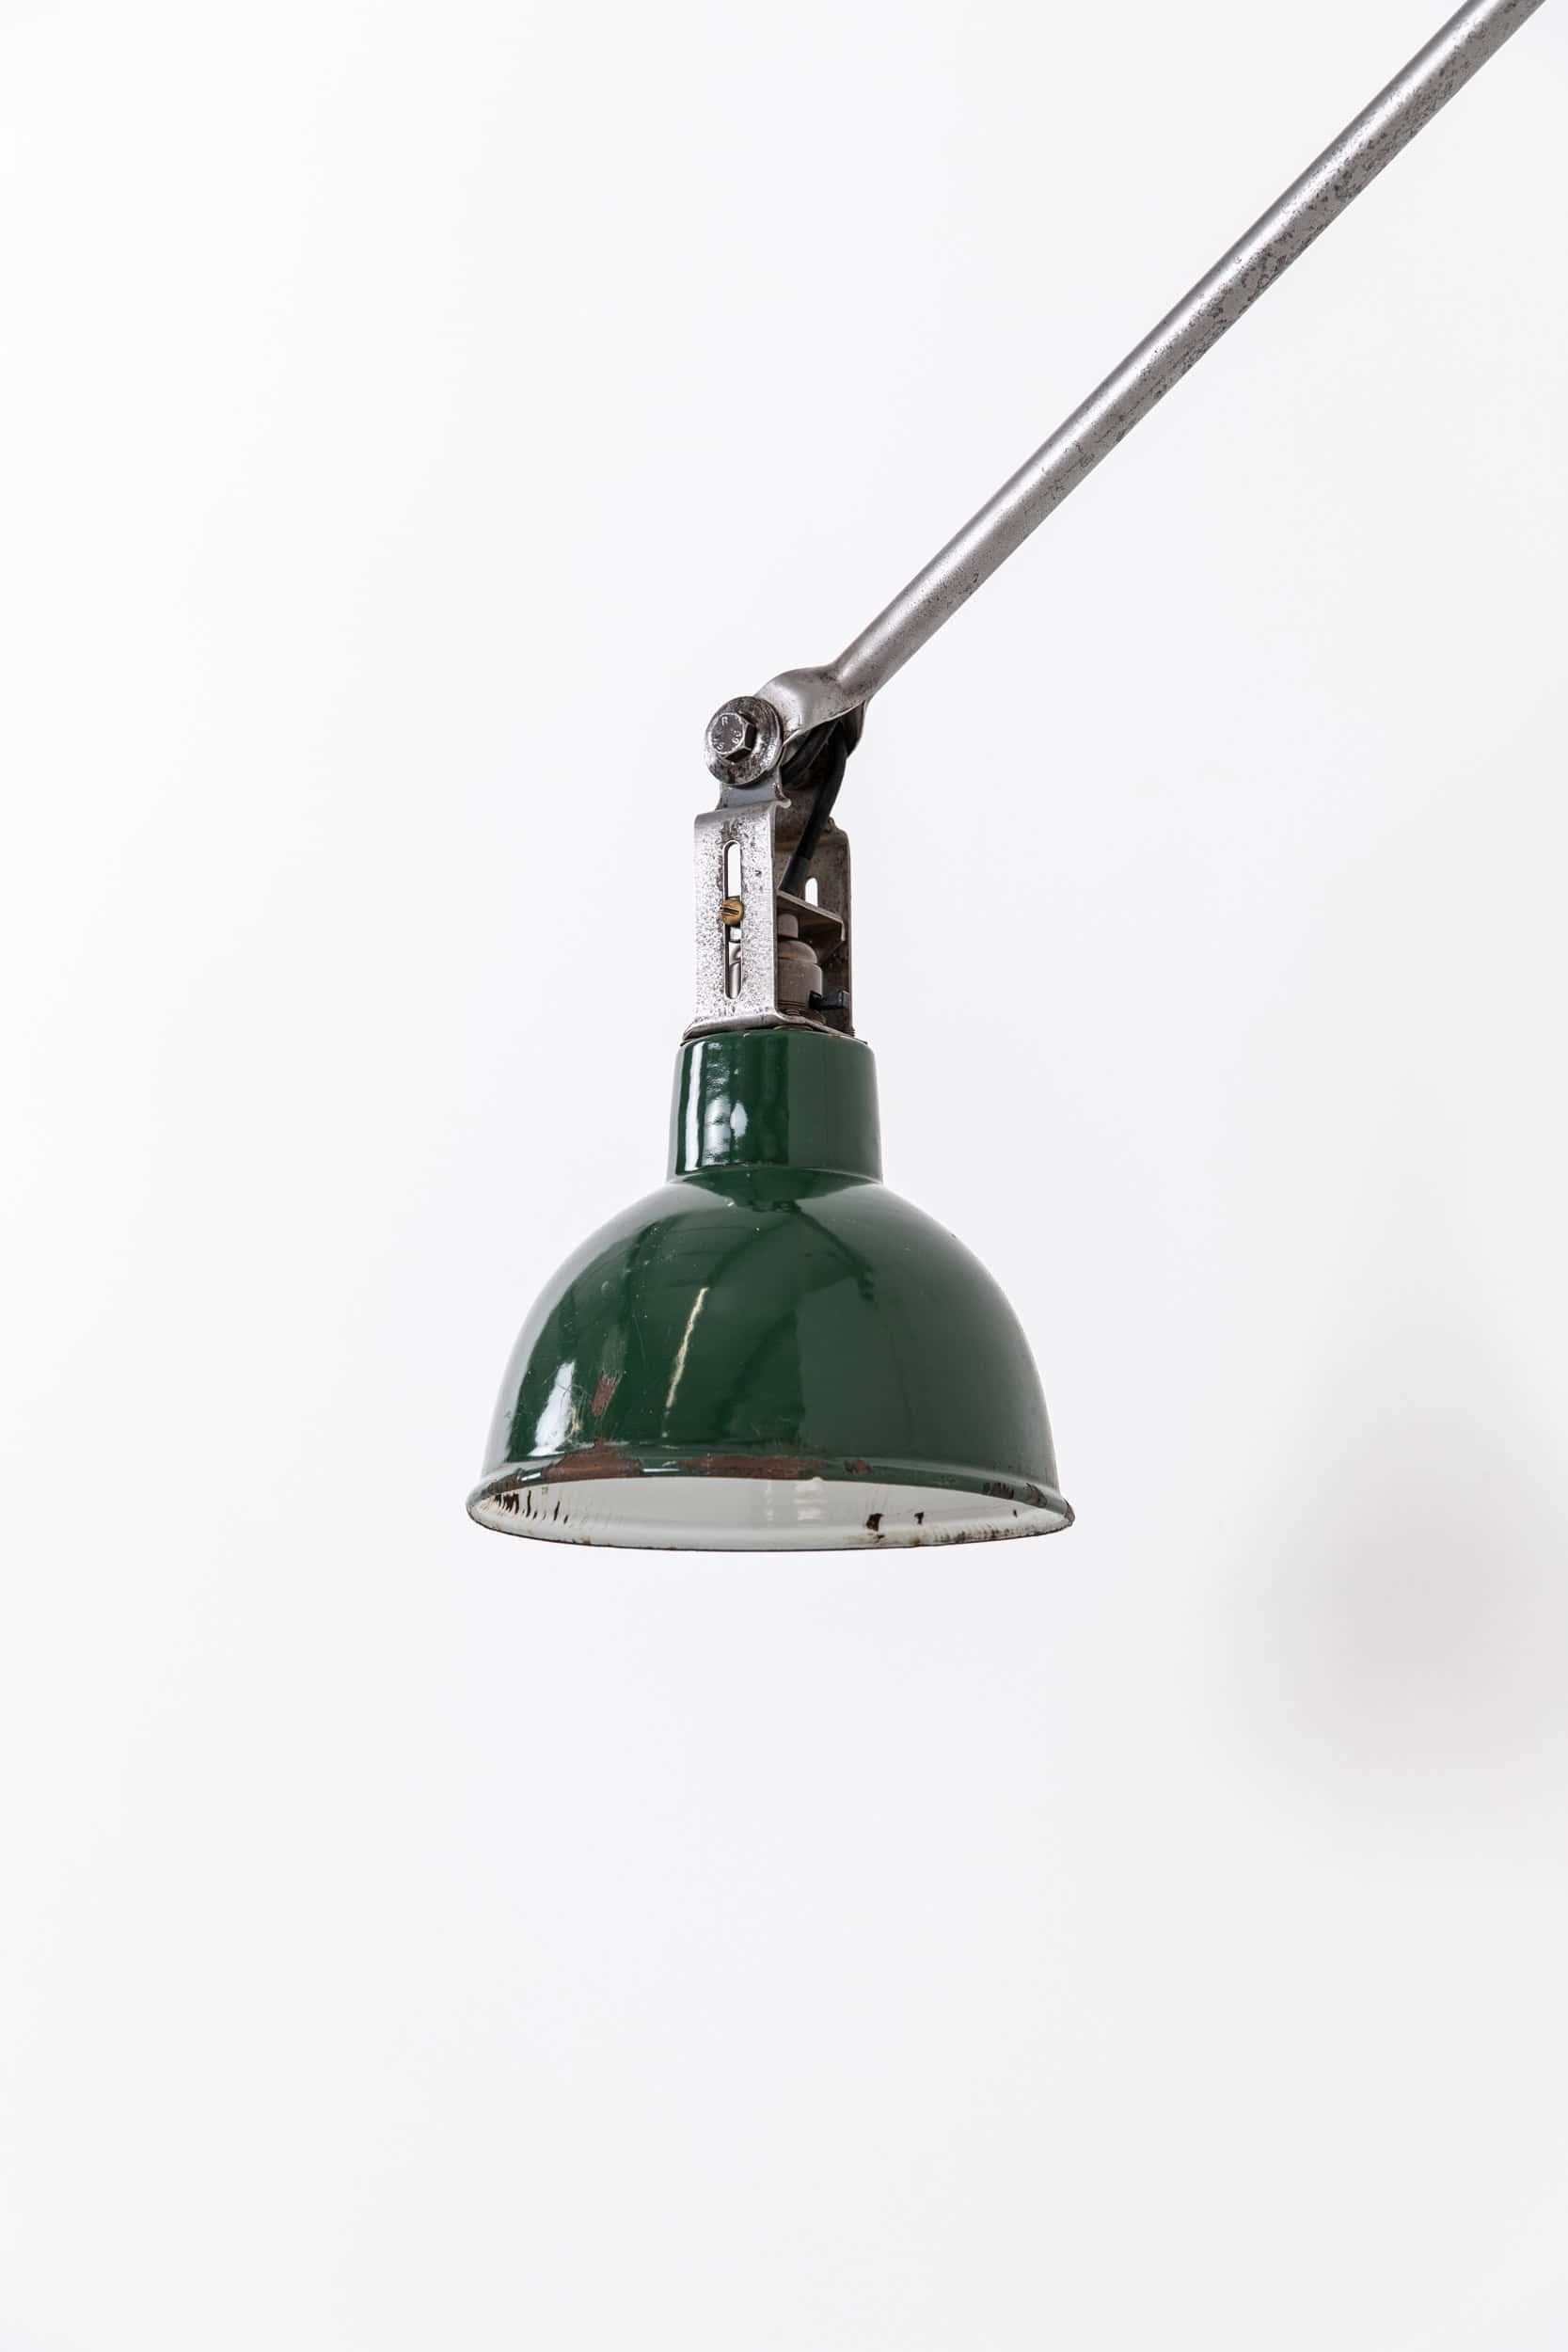 Large Vintage Industrial Steel Dugdills Machinist's Wall Desk Lamp Light, C.1930 For Sale 2